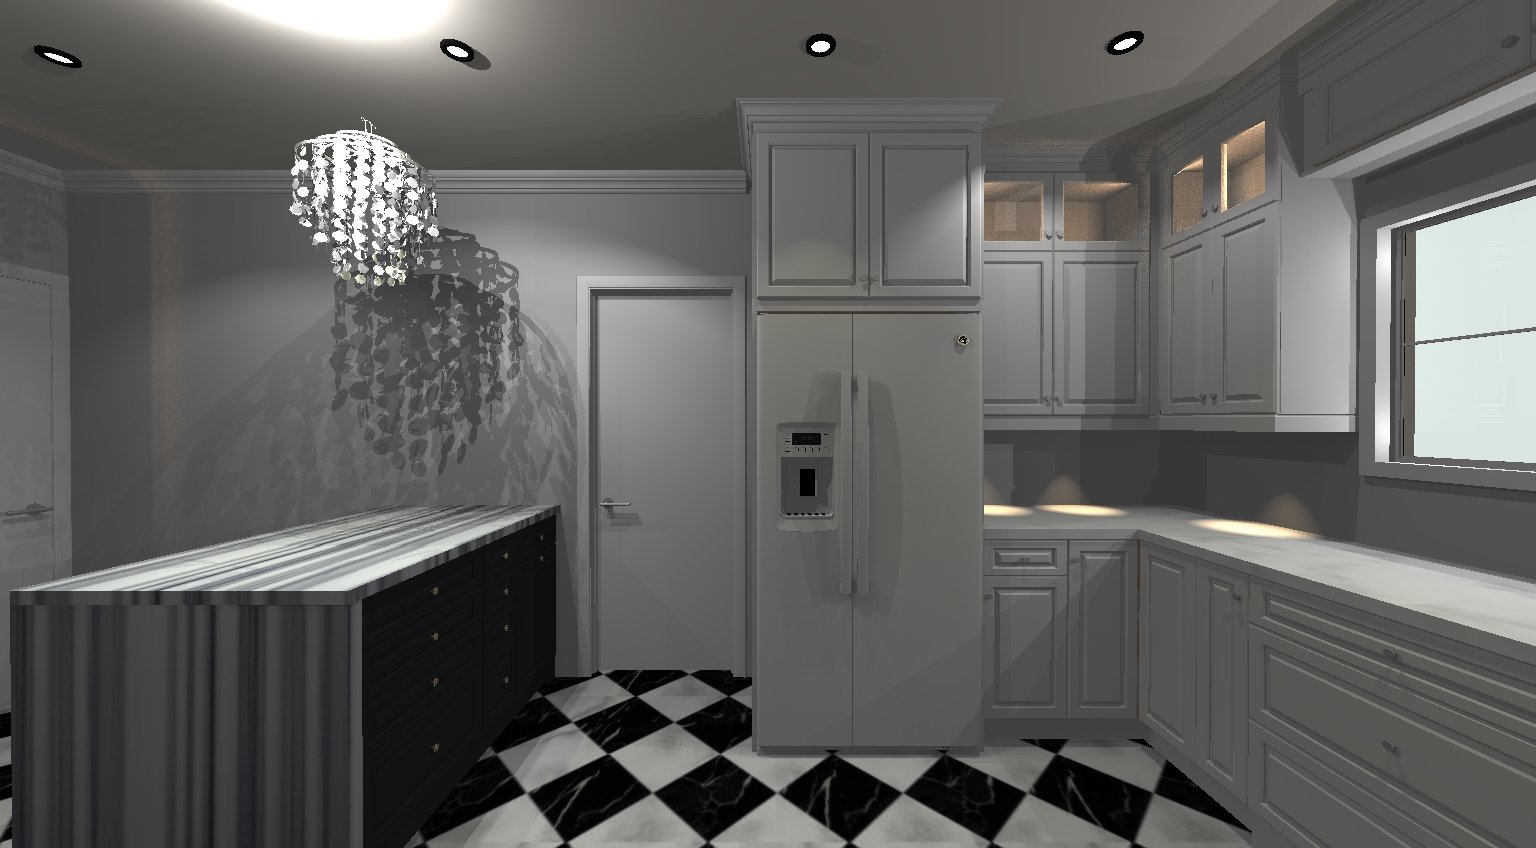 White kitchen mockup with checkboard flooring